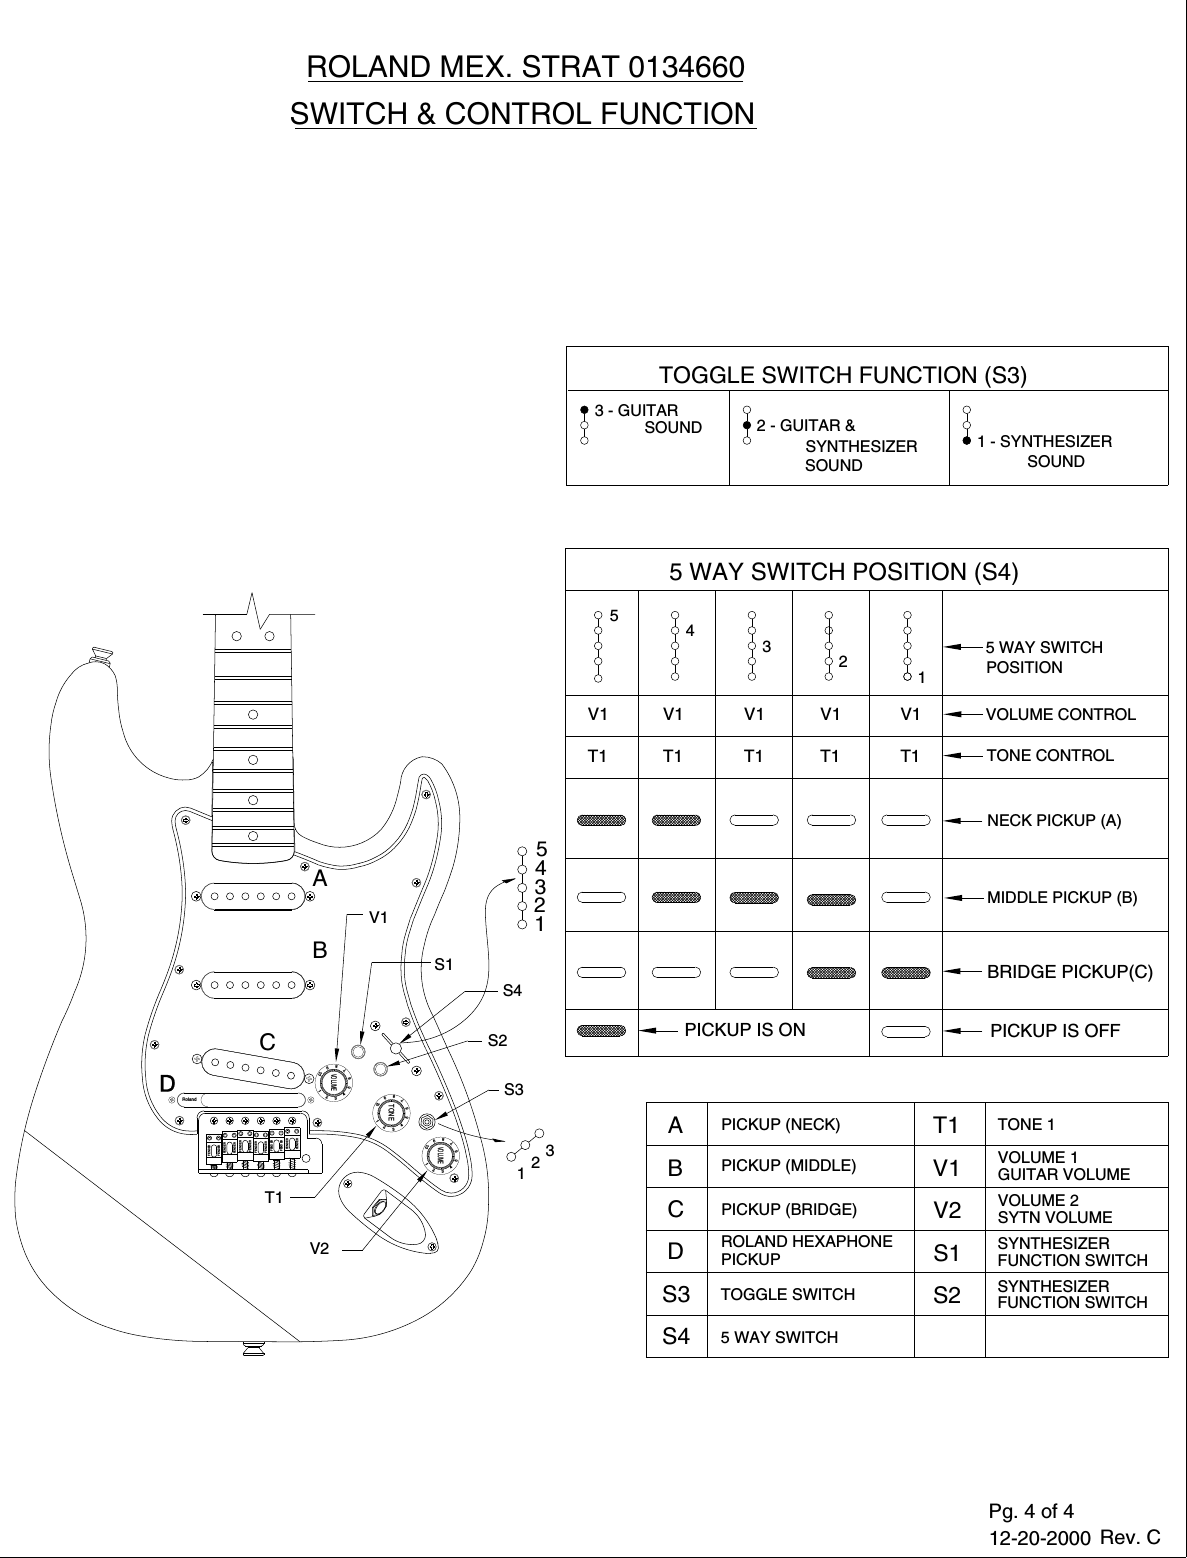 Page 4 of 4 - Fender  013-4660C SISD